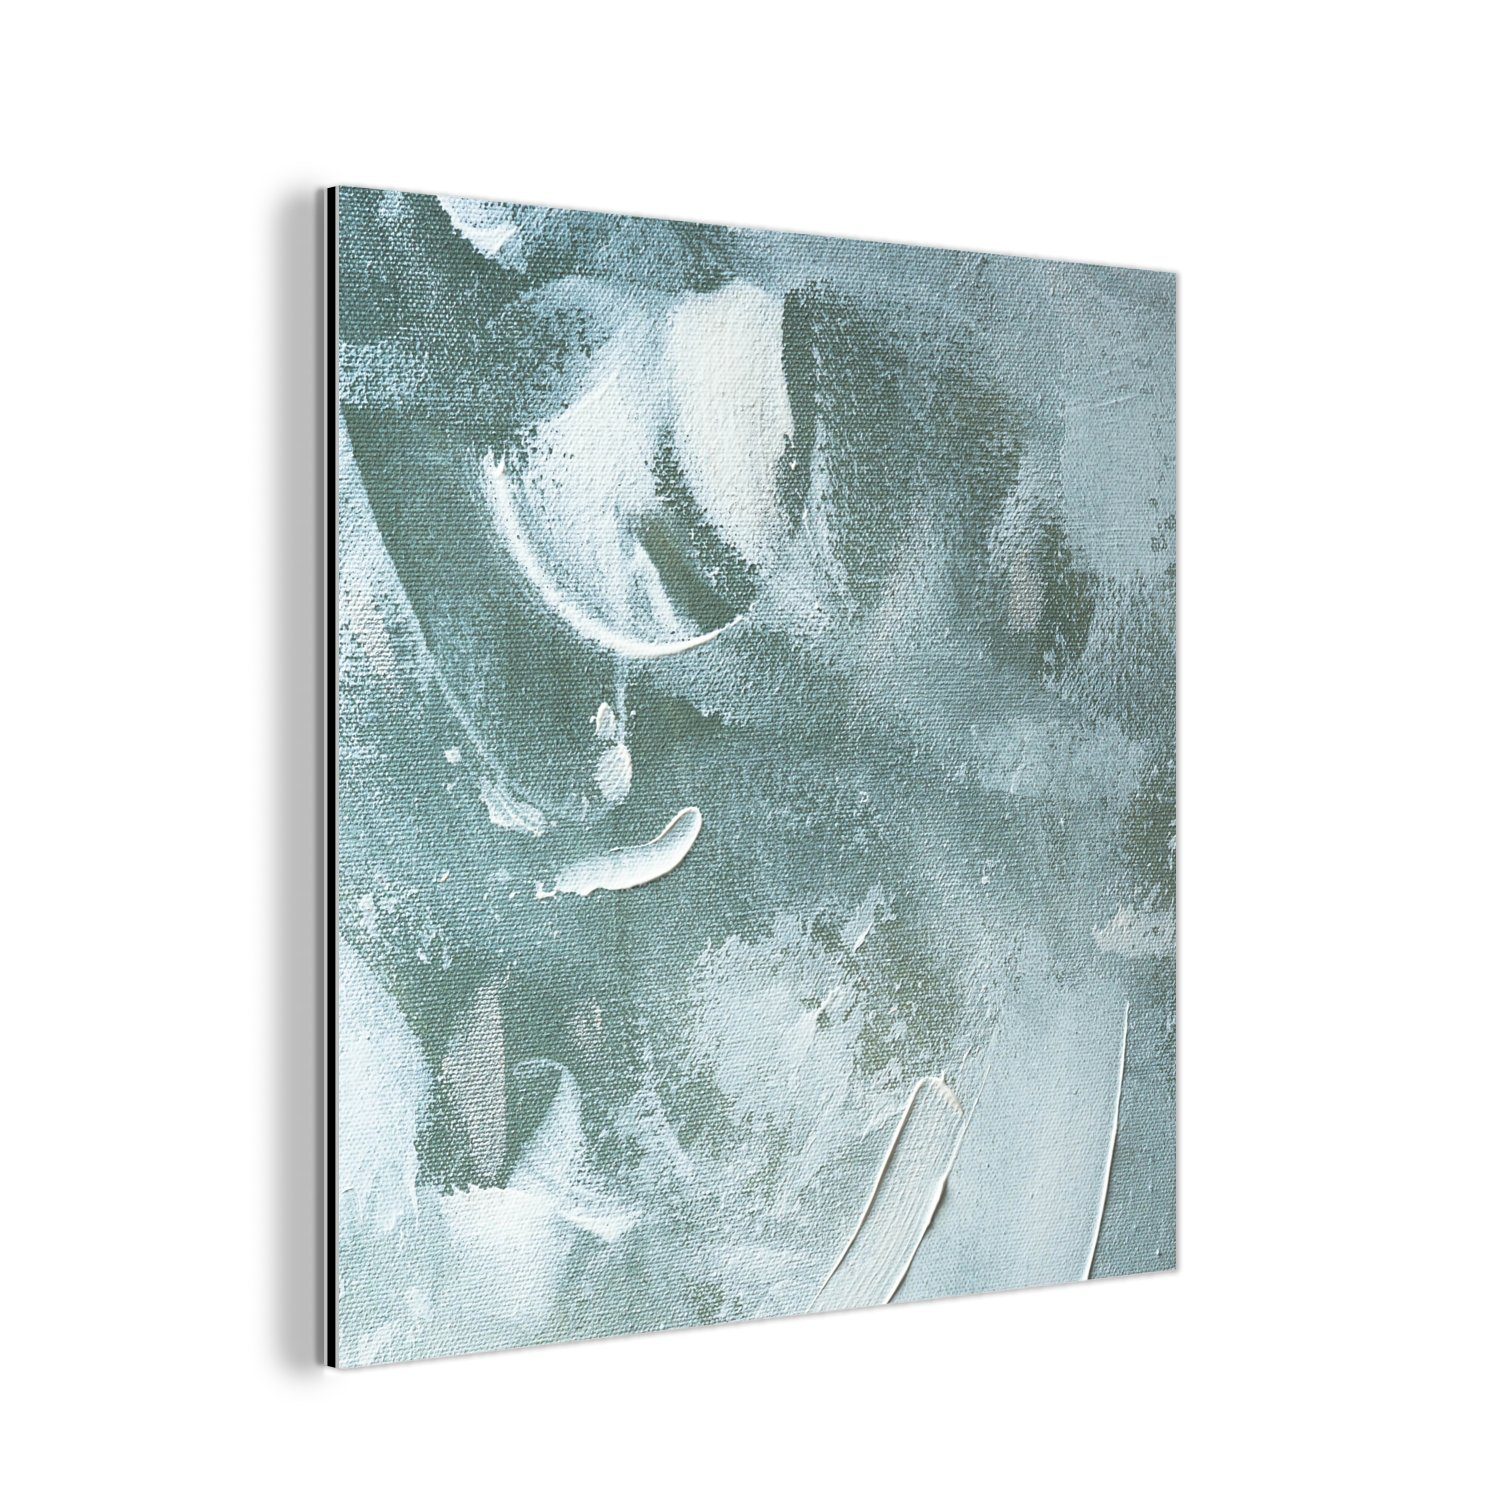 MuchoWow Metallbild Acrylfarbe - Abstrakt - Design, (1 St), Alu-Dibond-Druck, Gemälde aus Metall, Aluminium deko | Bilder